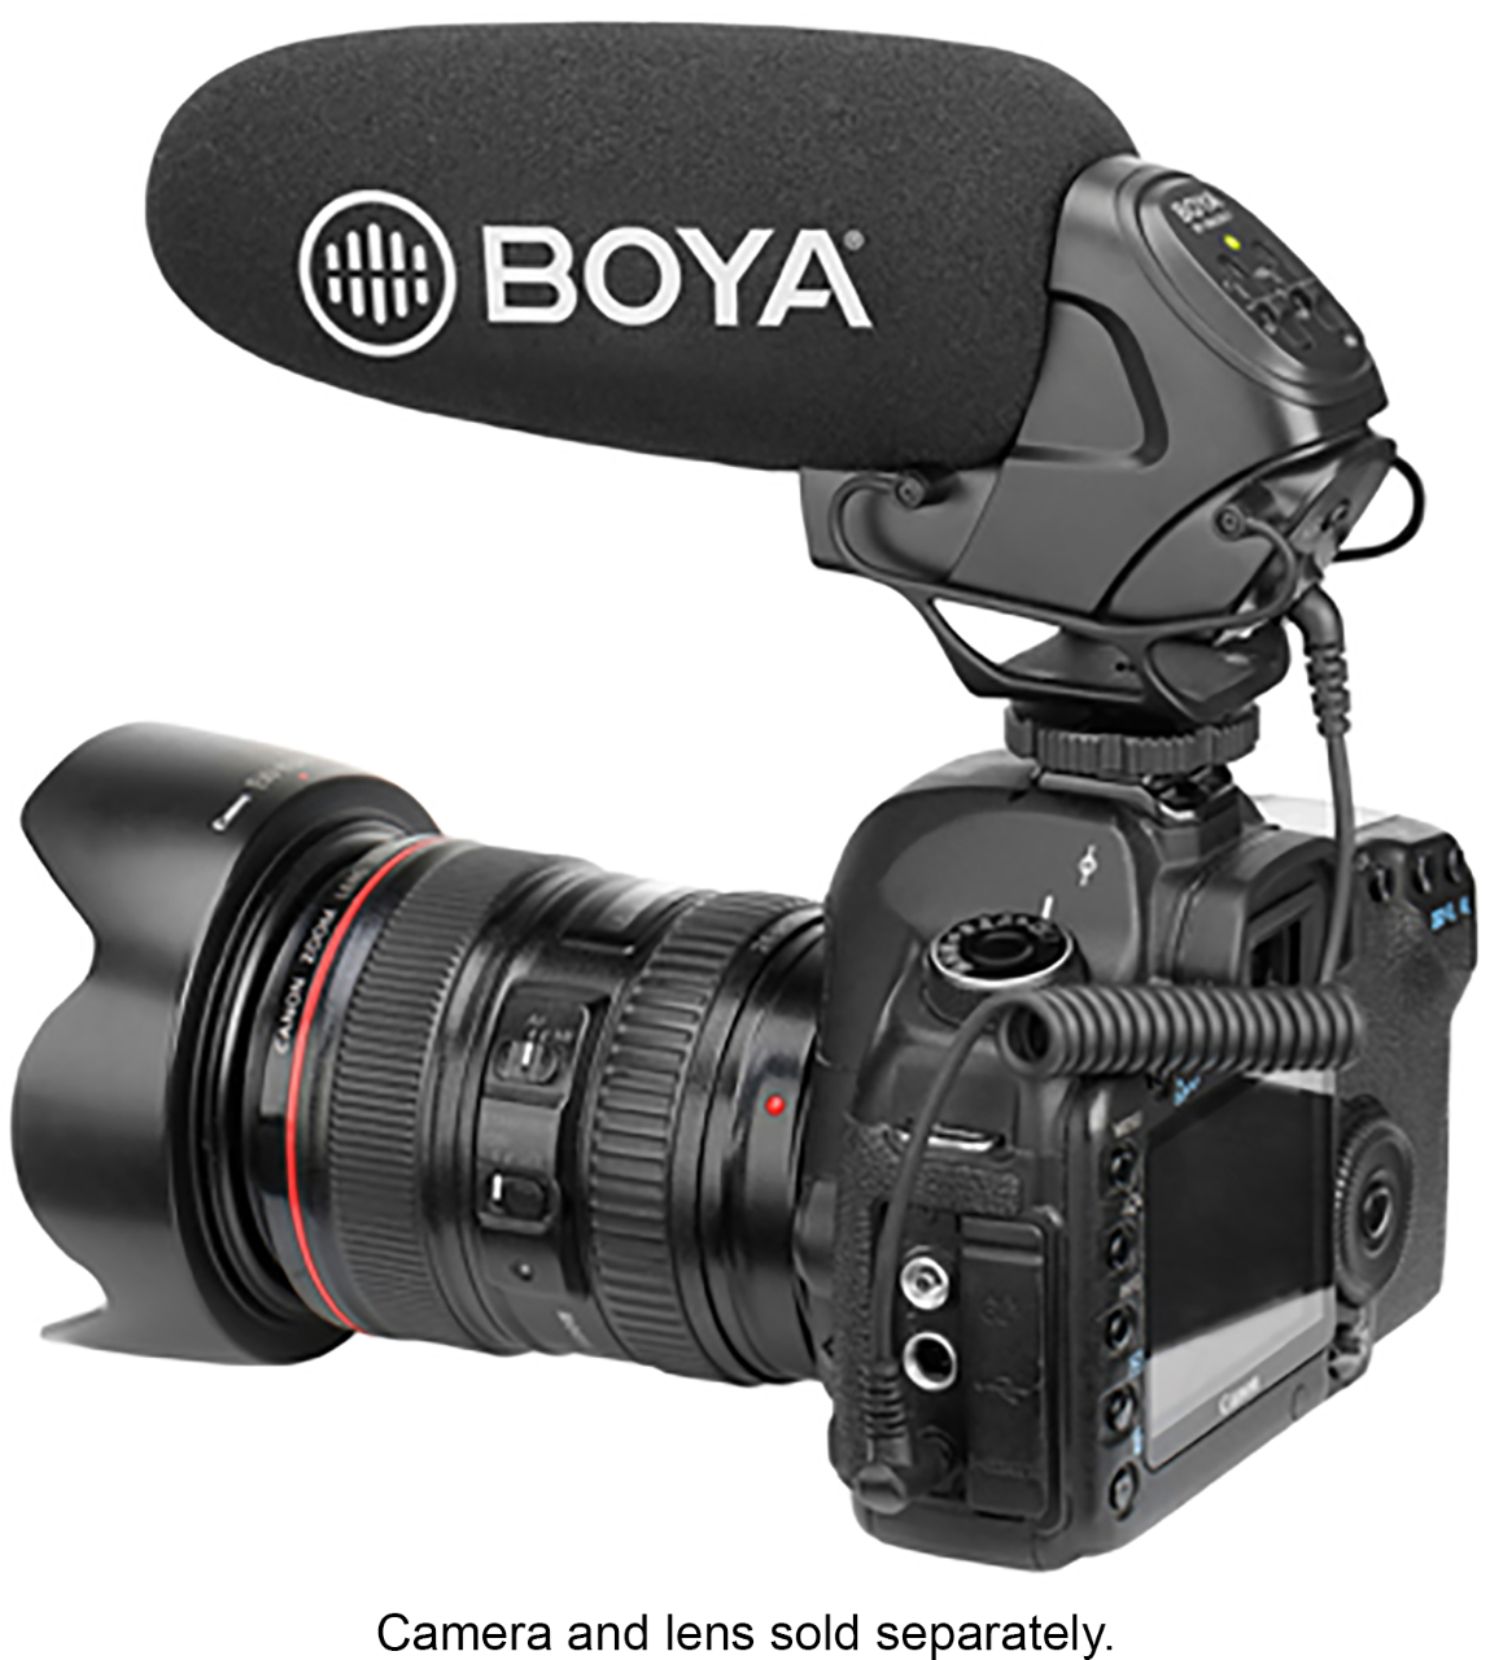 BOYA BY-BM2040 Professional Camera Microphone Super-Cardioid On-camera  Shotgun Microphone for Canon Nikon Sony  Recording